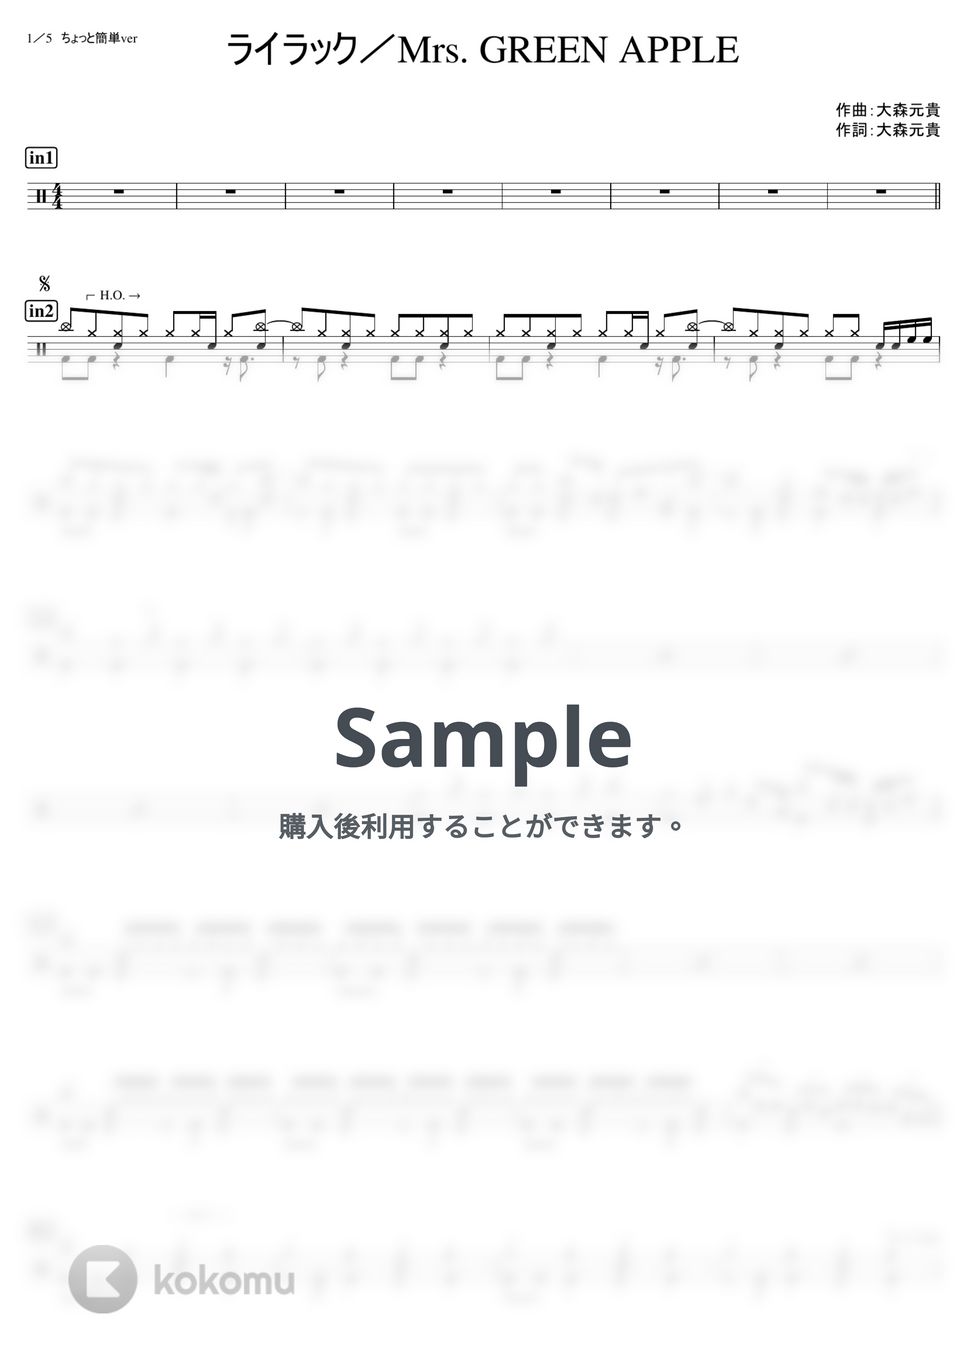 Mrs. GREEN APPLE - ライラック (中級) by kamishinjo-drum-school